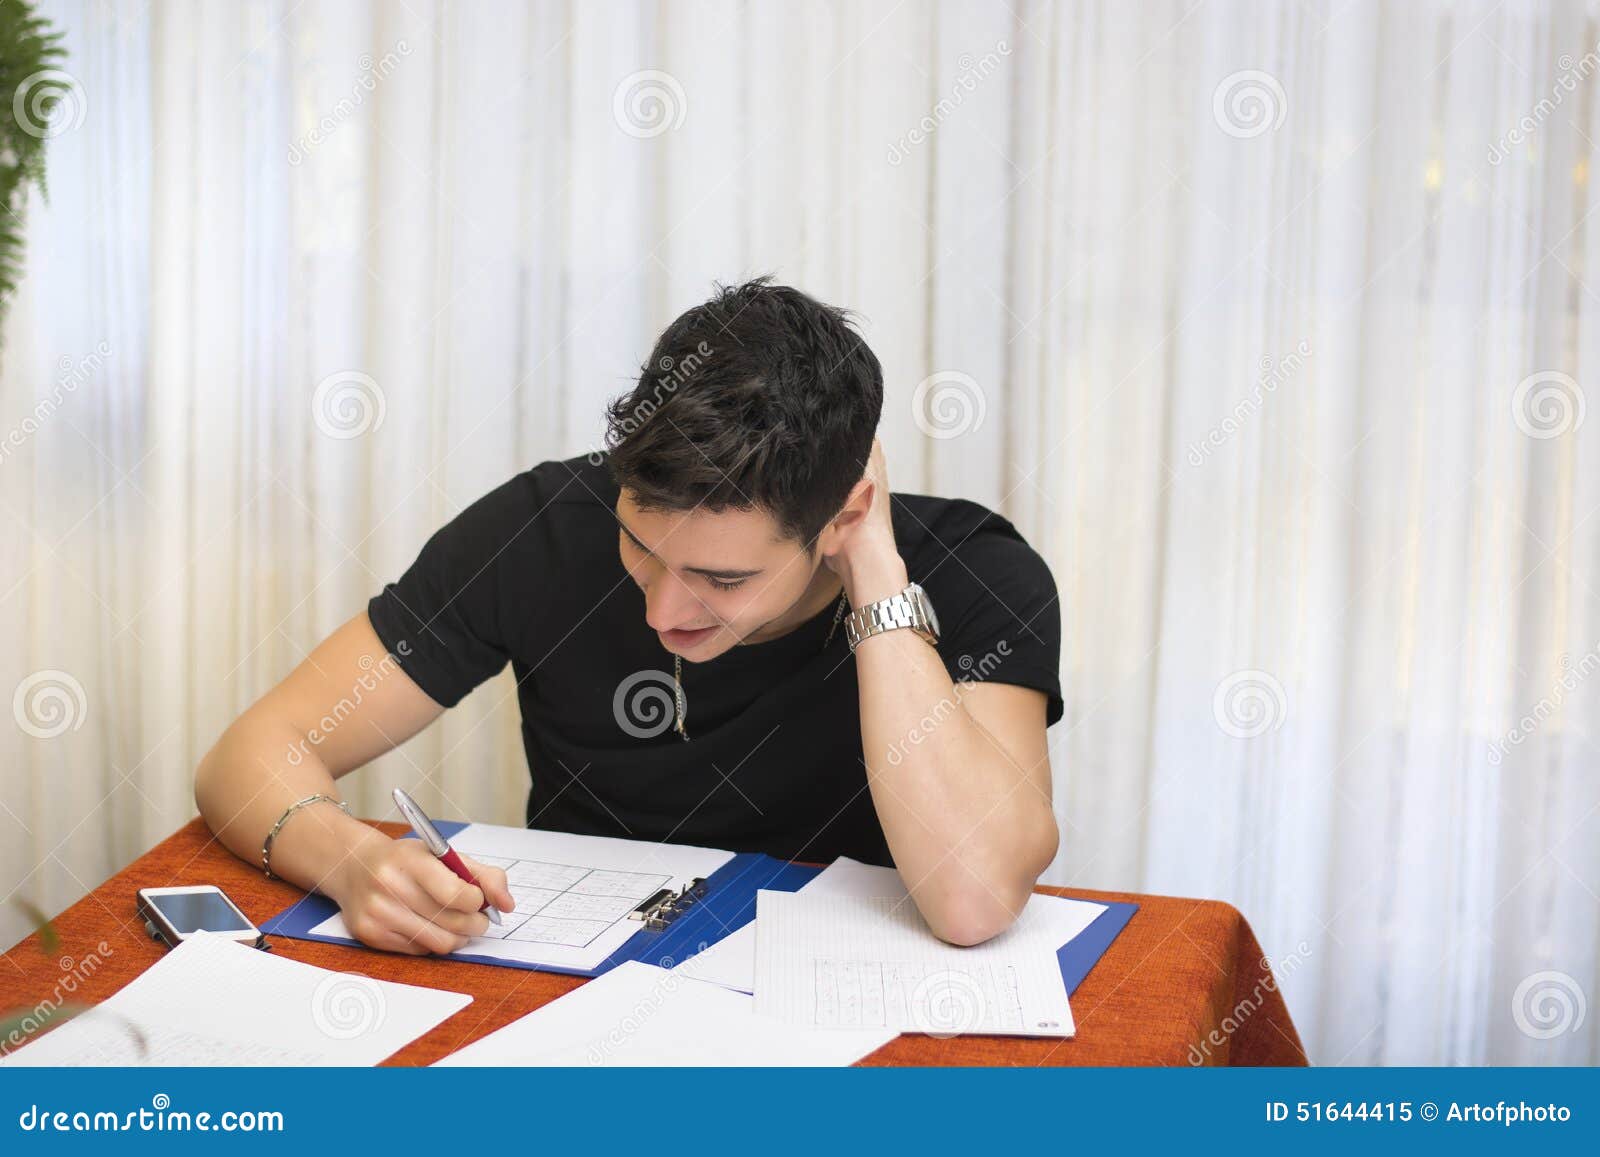 man doing homework